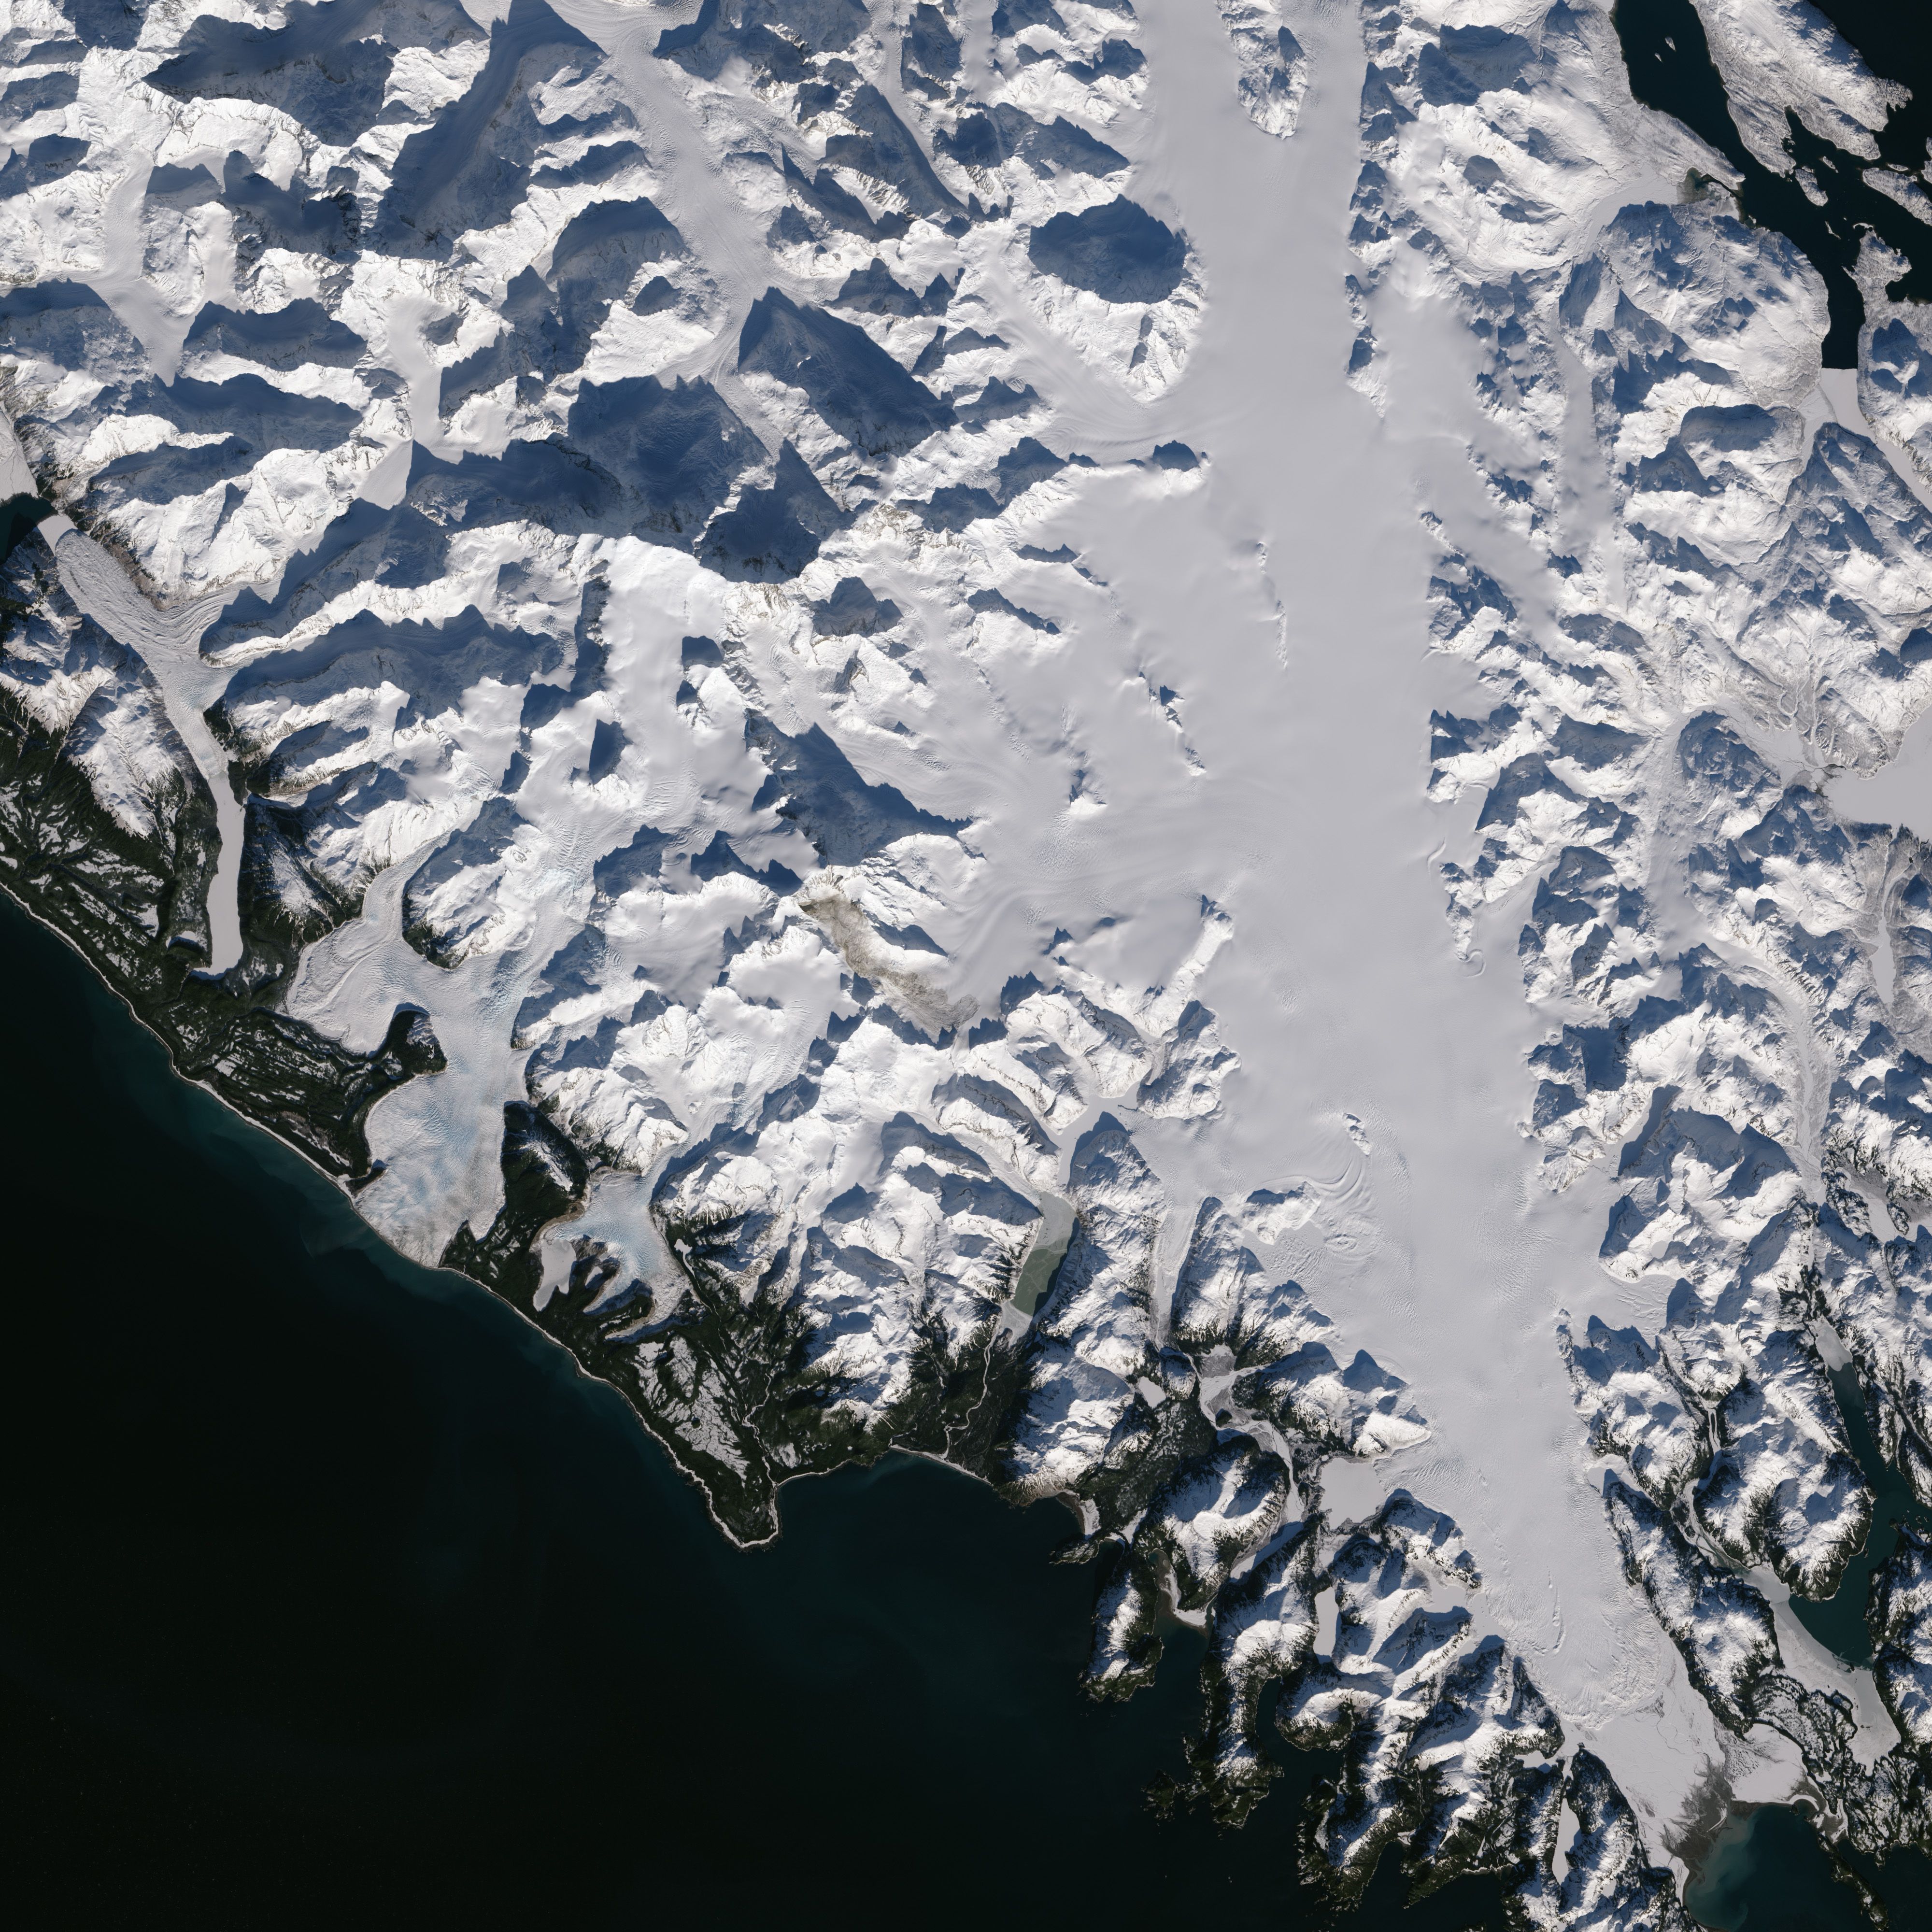 Large Landslide Detected in Southeastern Alaska - related image preview